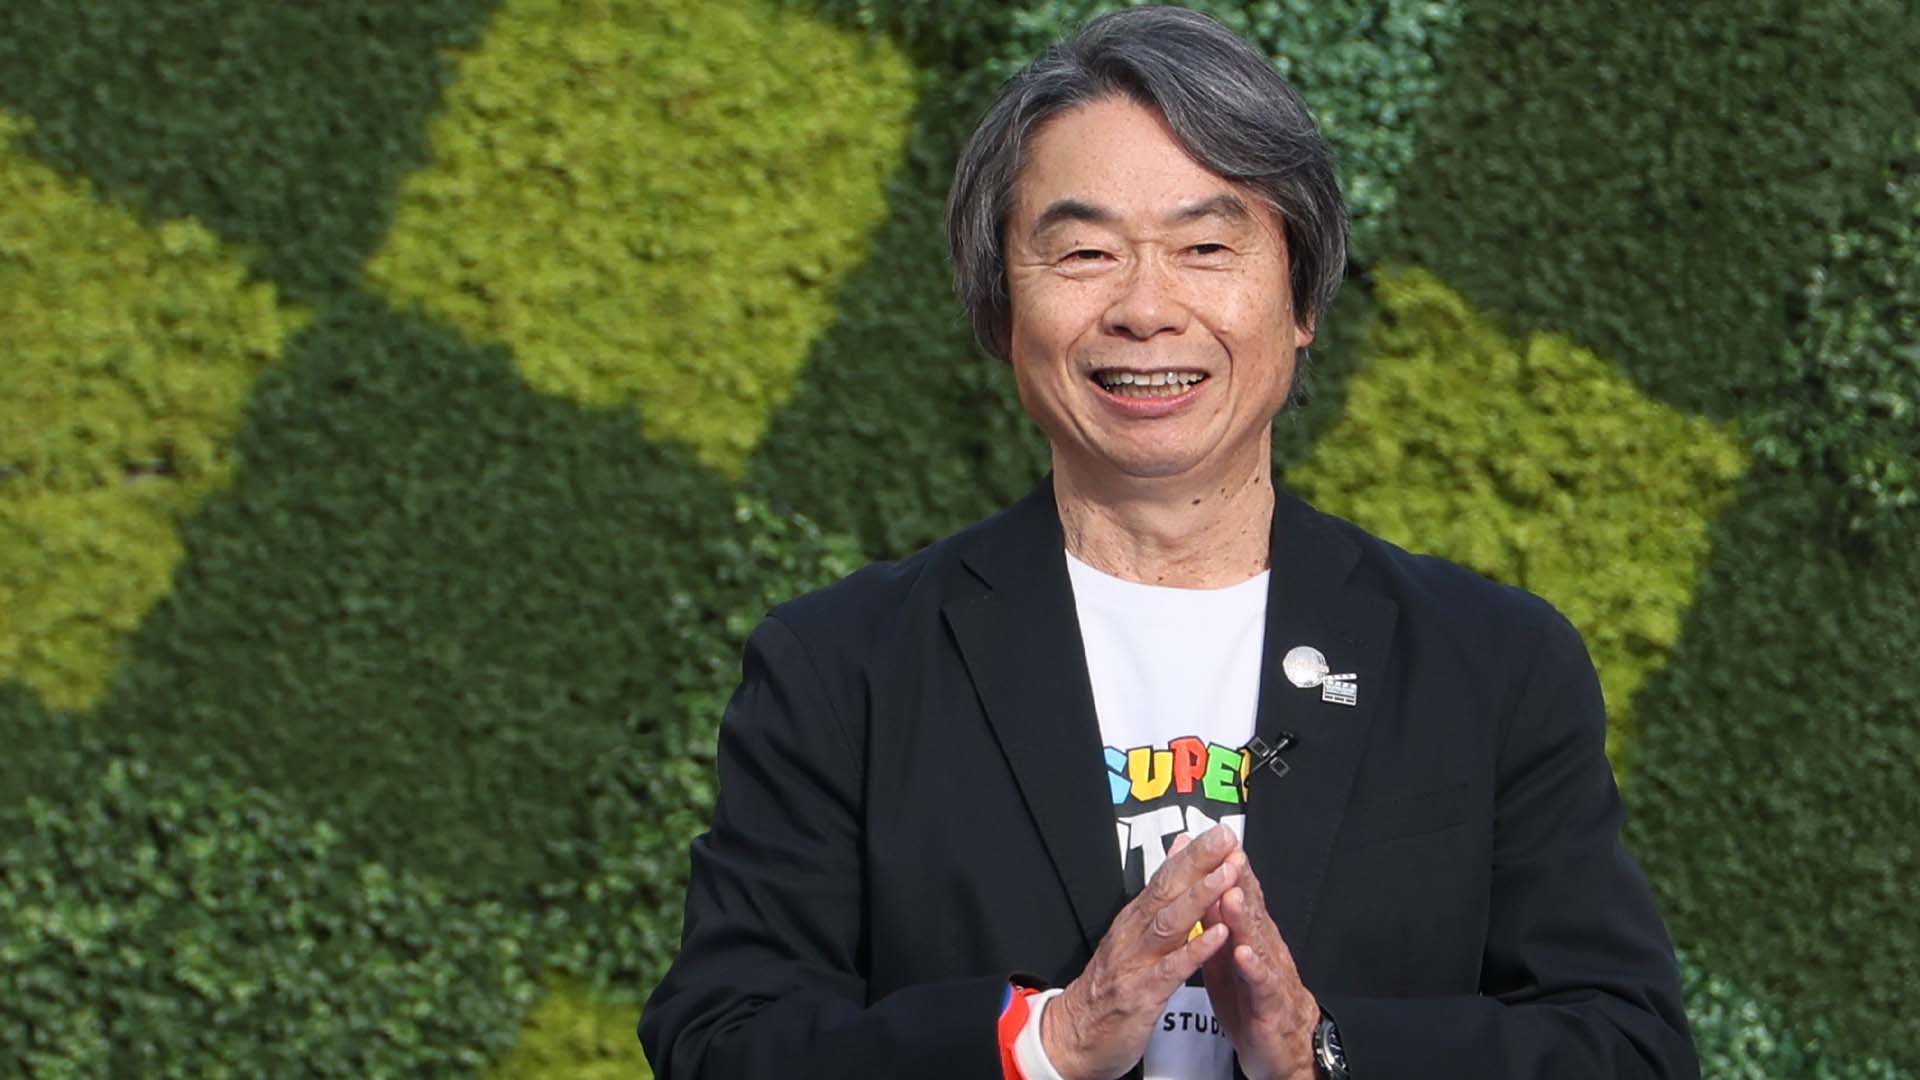 Nintendo Reveals How Much Game Directors Like Shigeru Miyamoto Make Per Year